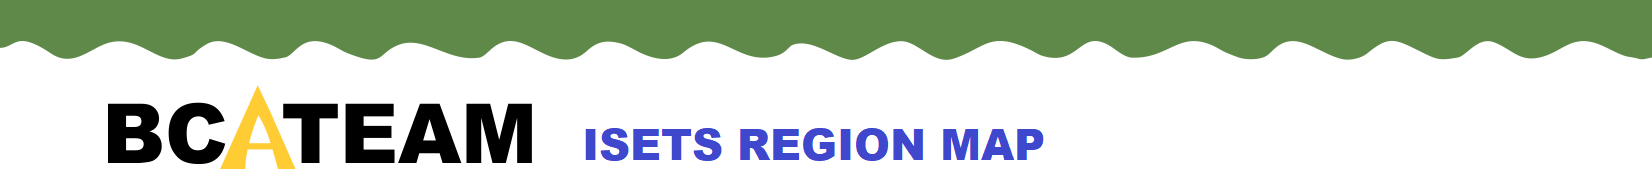 bcateam isets region map banner